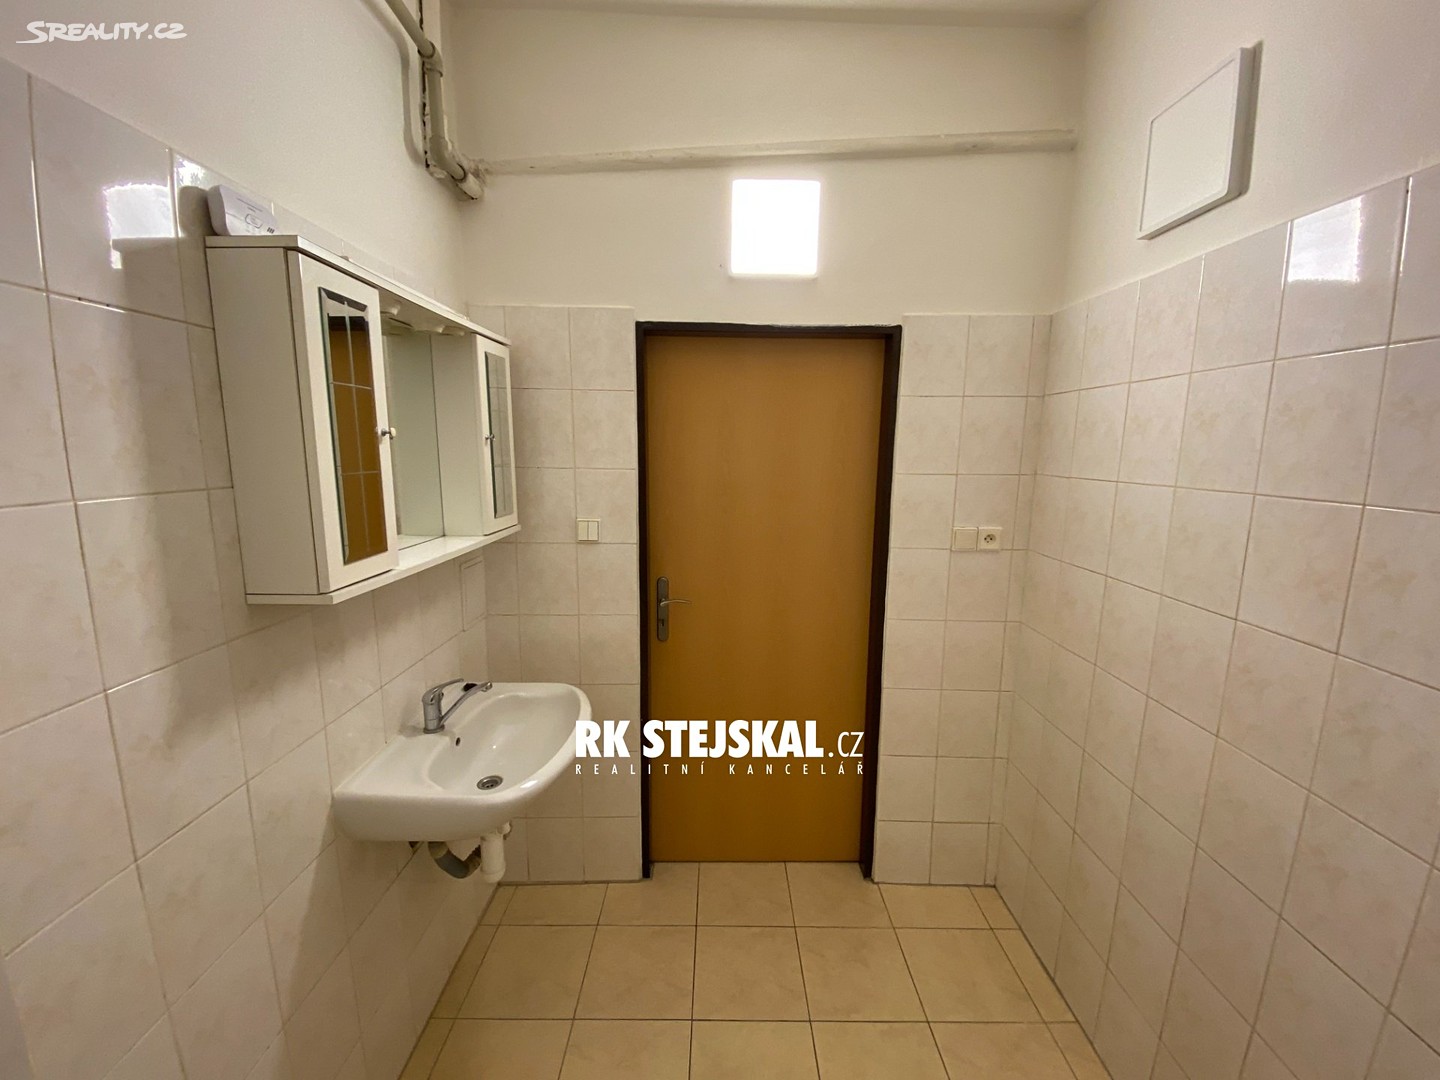 Pronájem bytu 2+kk 43 m², Terronská, Praha 6 - Bubeneč